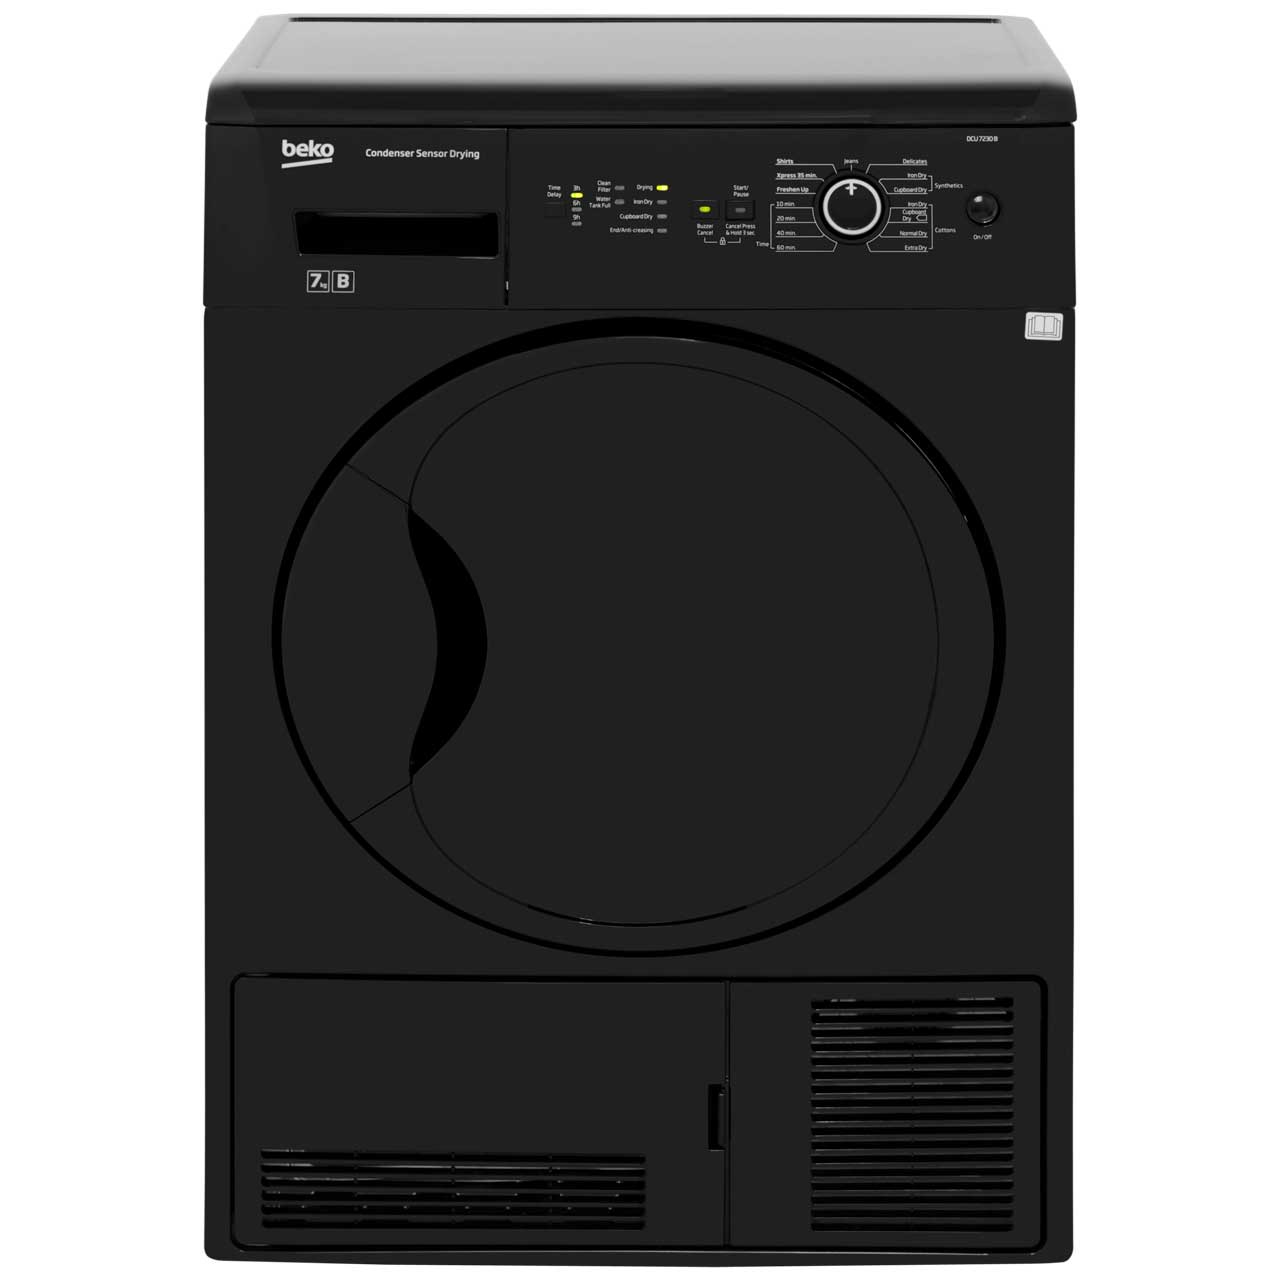 Beko DCU7230B Condenser Tumble Dryer Review